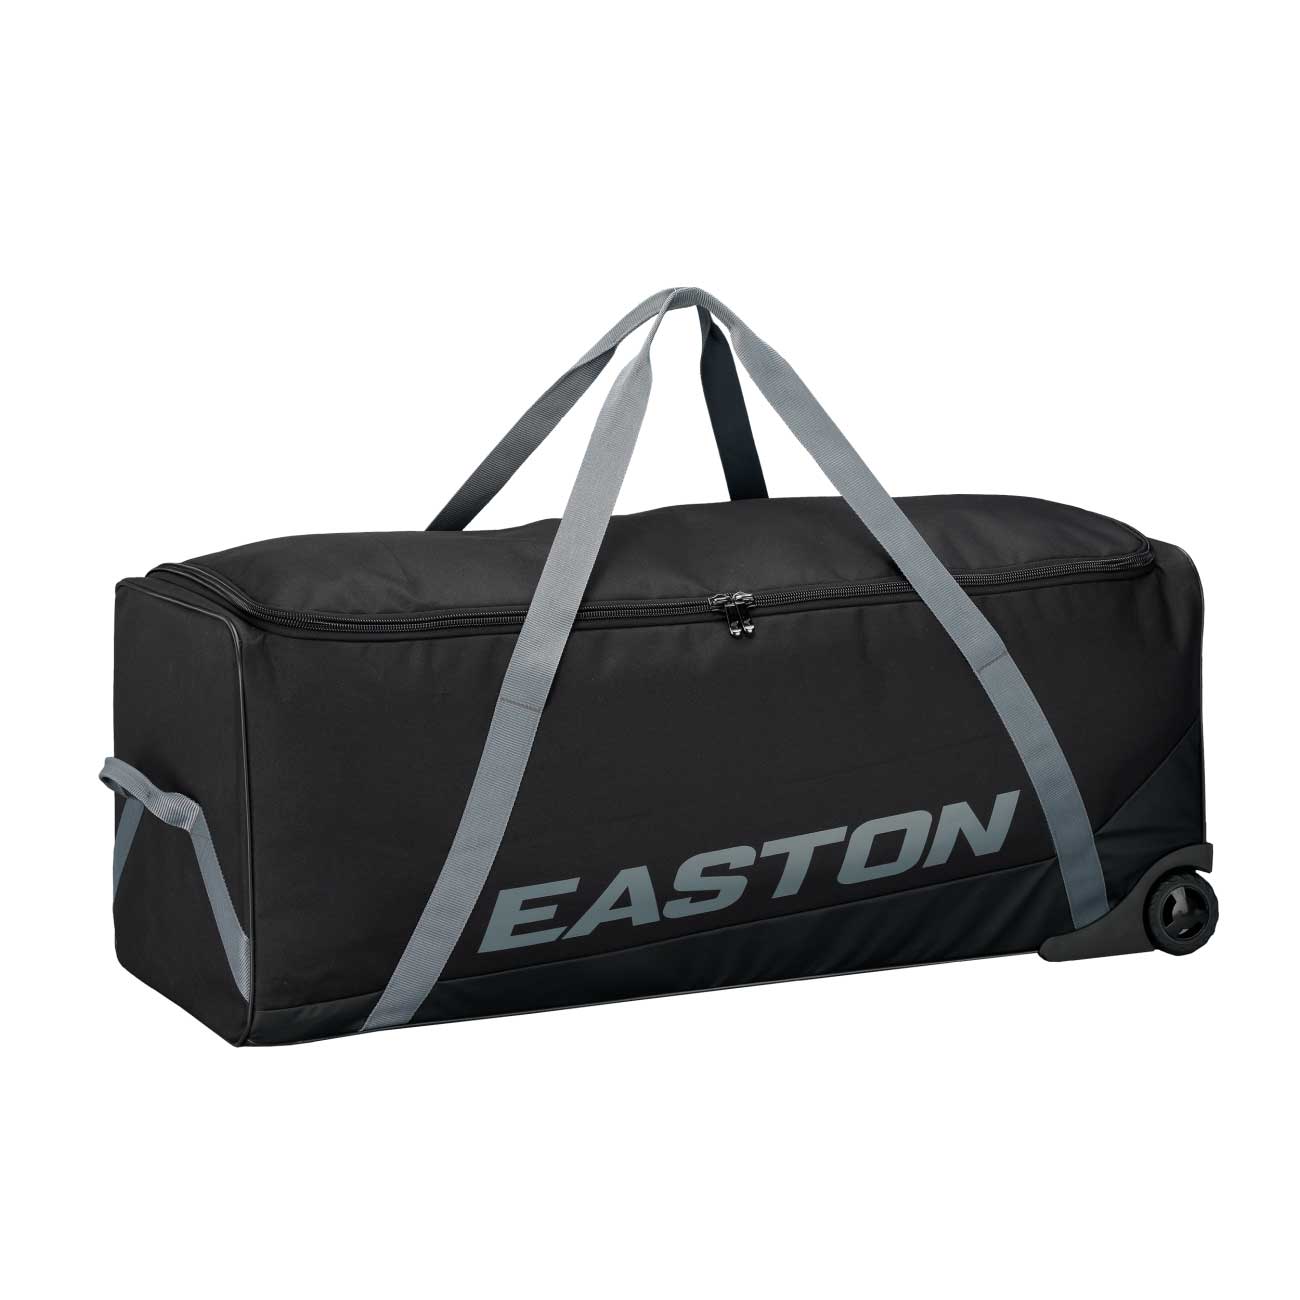 Easton Team Equipment Wheeled Bag - Black